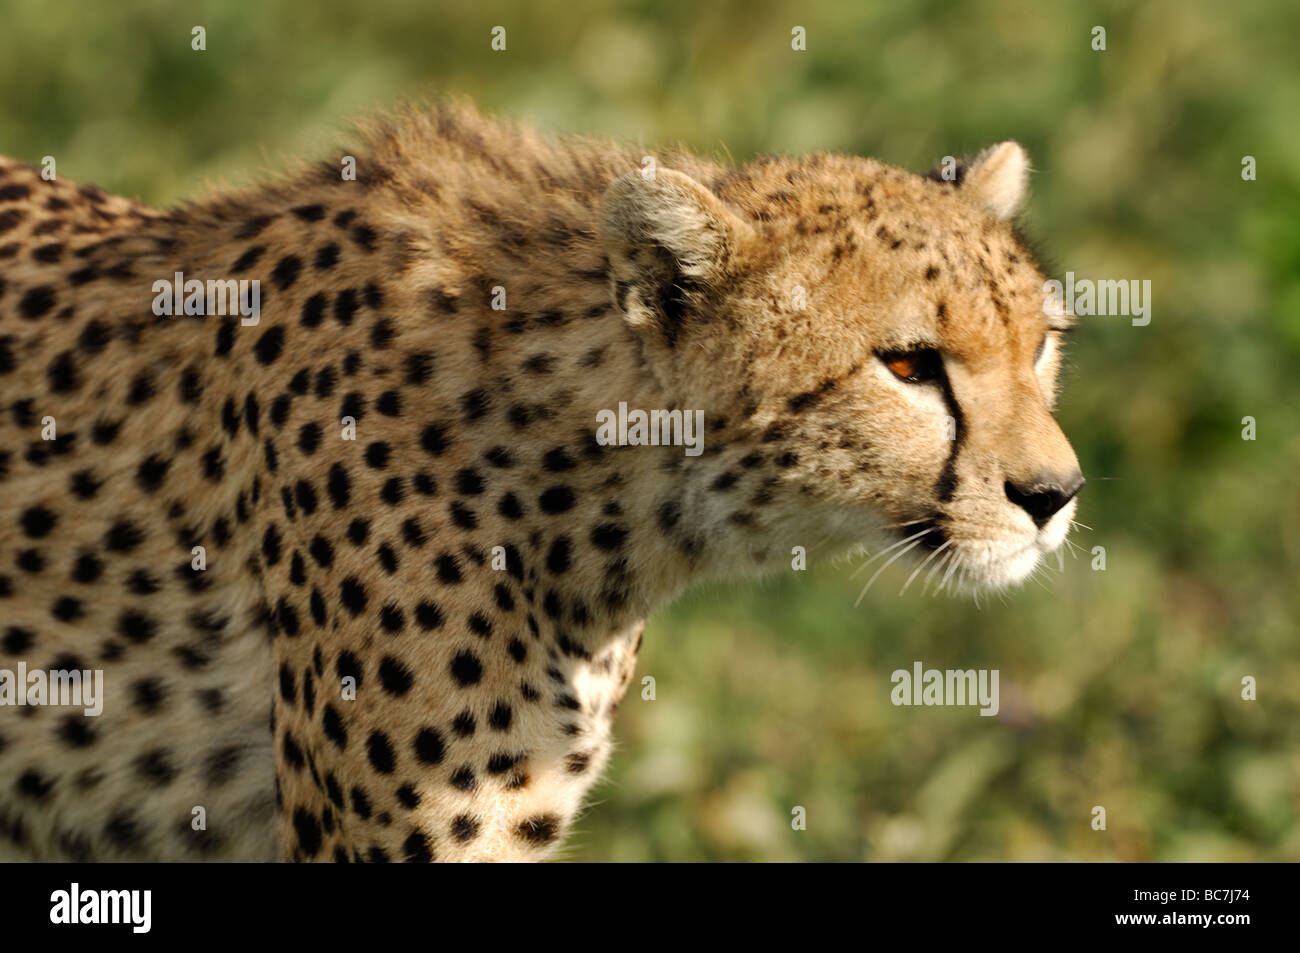 Stock Foto Nahaufnahme Profil eines Geparden, Ndutu, Tansania, Februar 2009. Stockfoto